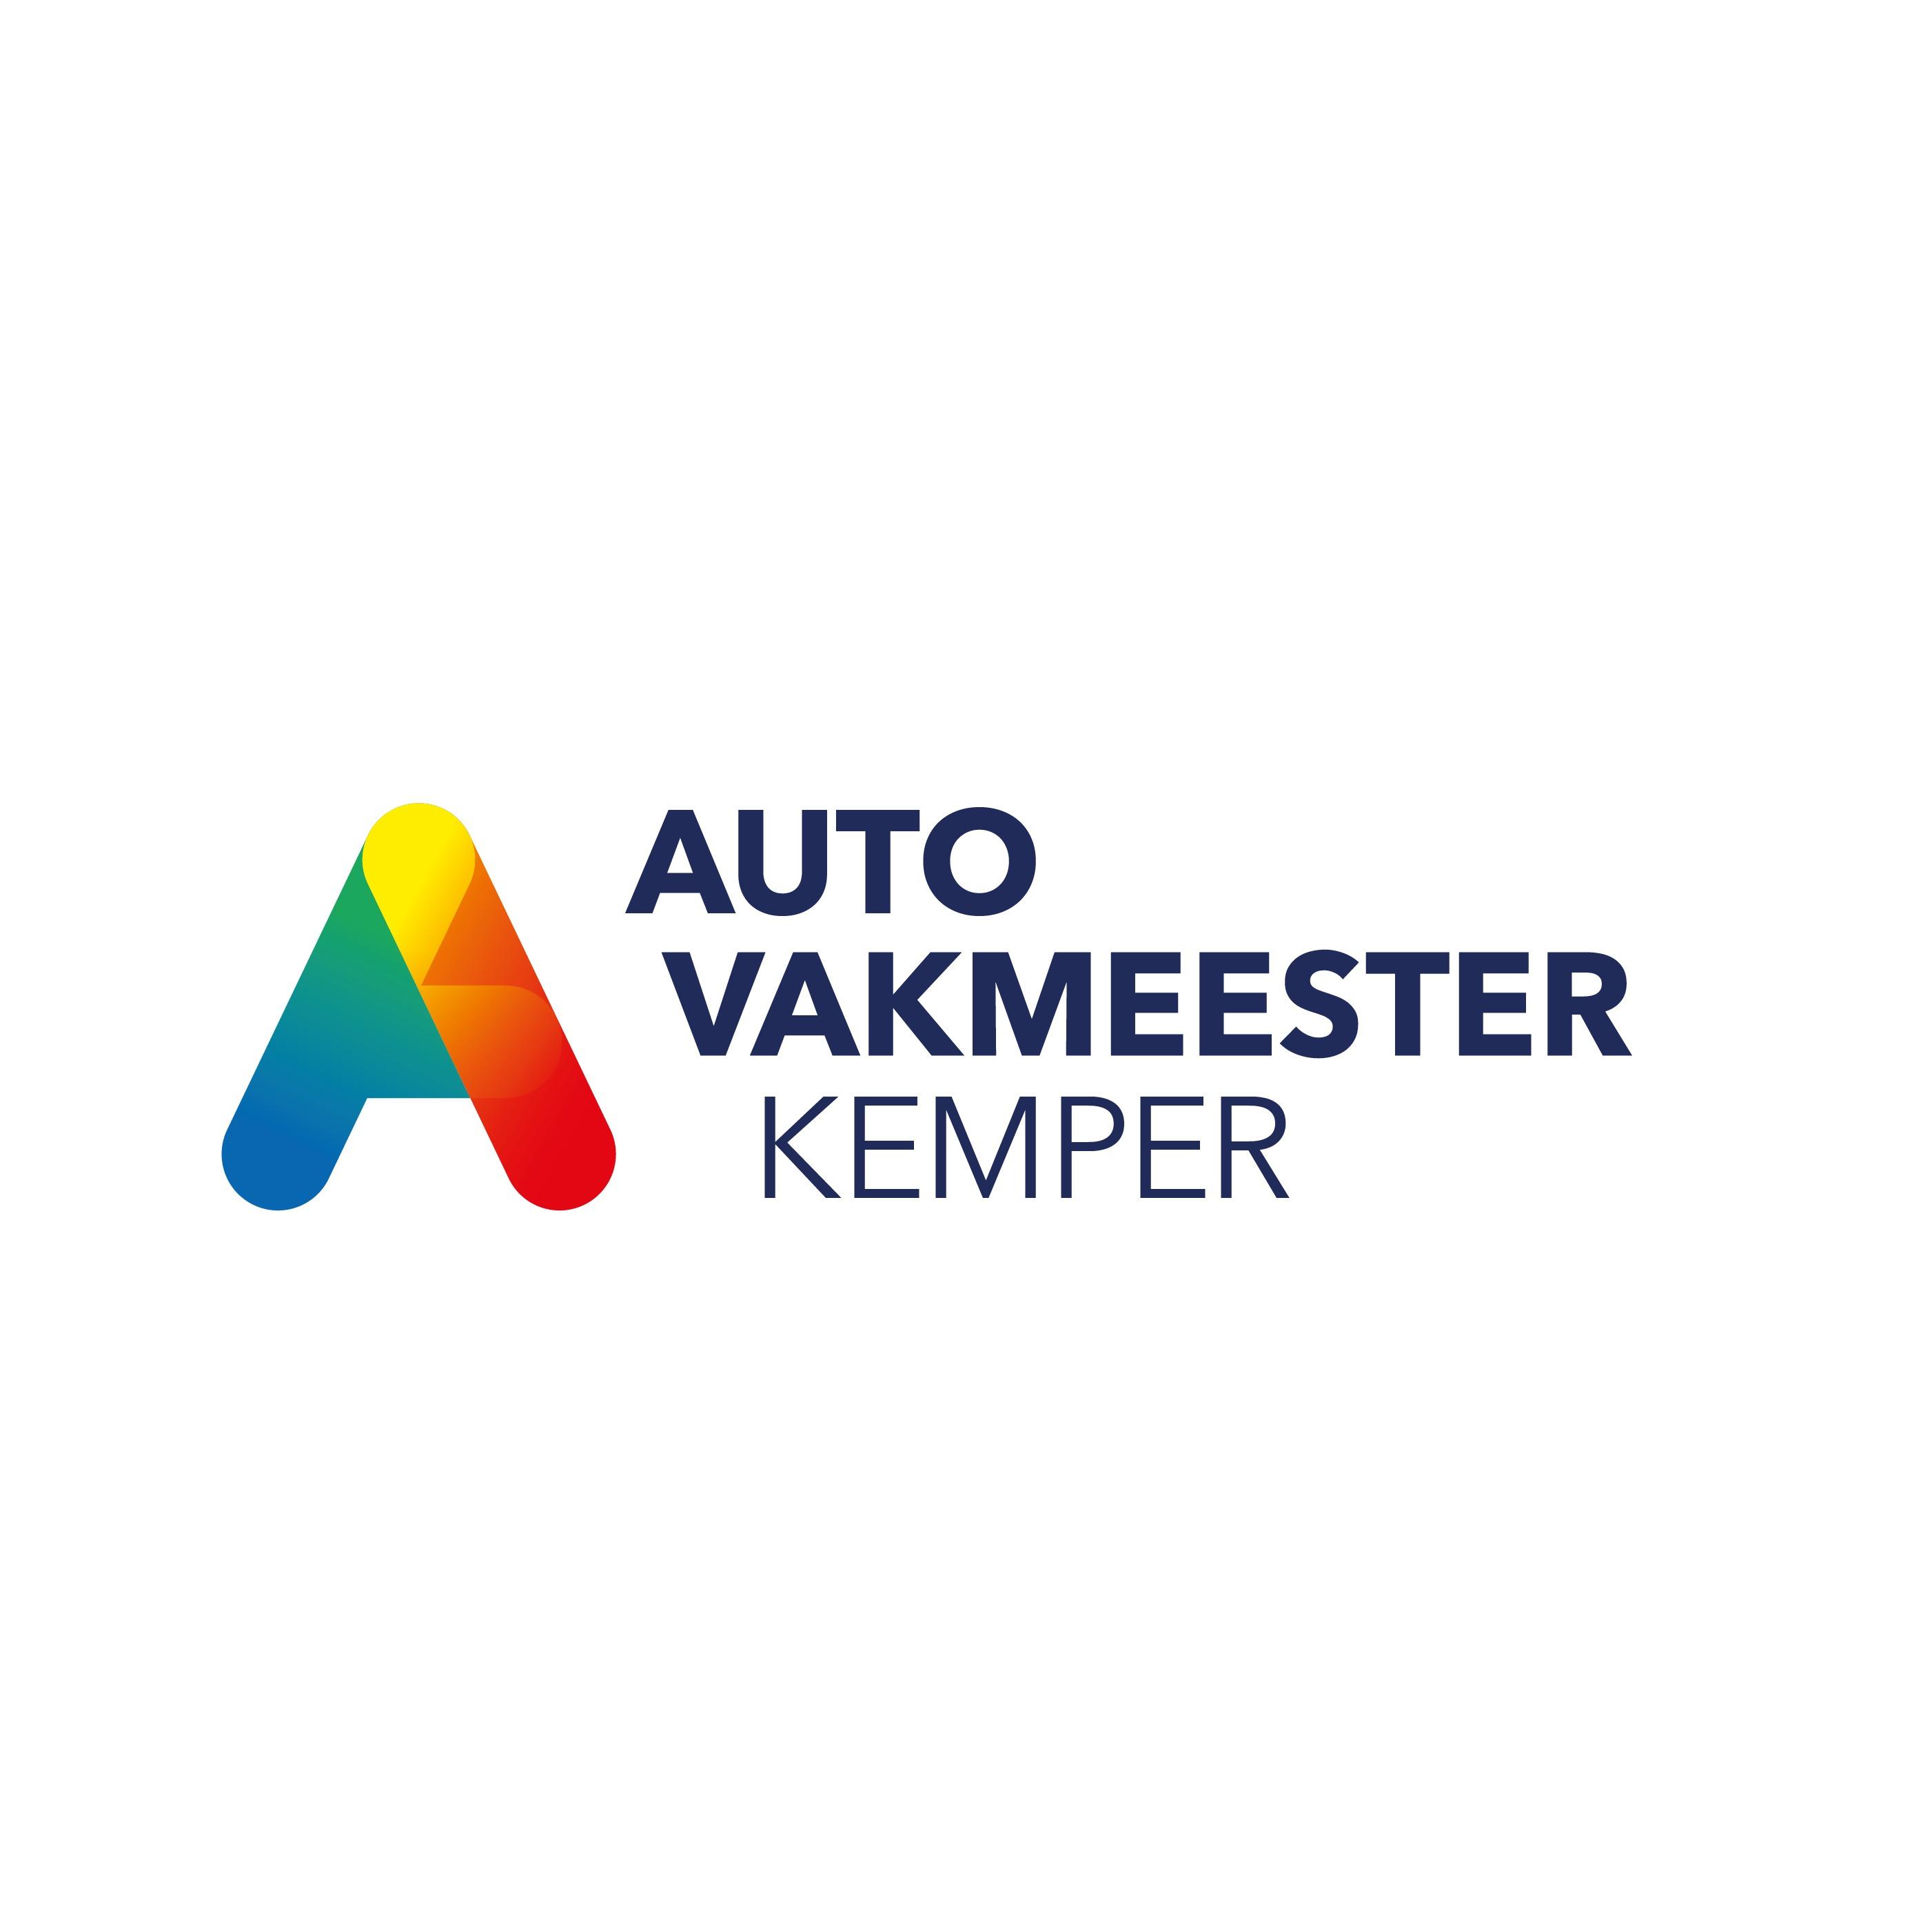 Autovakmeester Kemper Logo